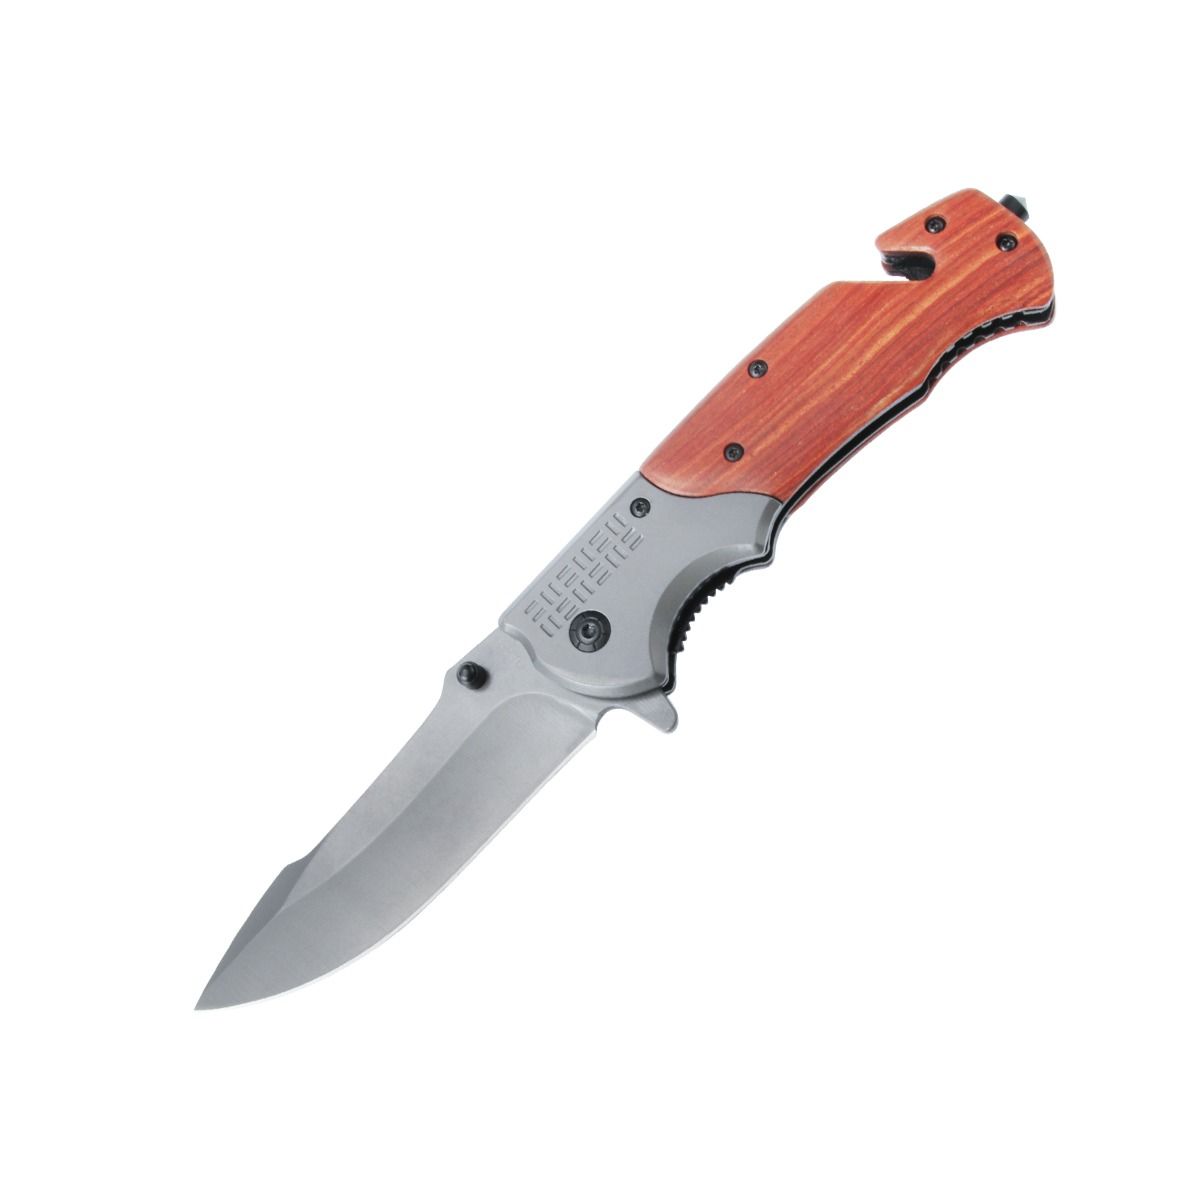 DA308 folding EDC knife | Shop Today. Get it Tomorrow! | takealot.com